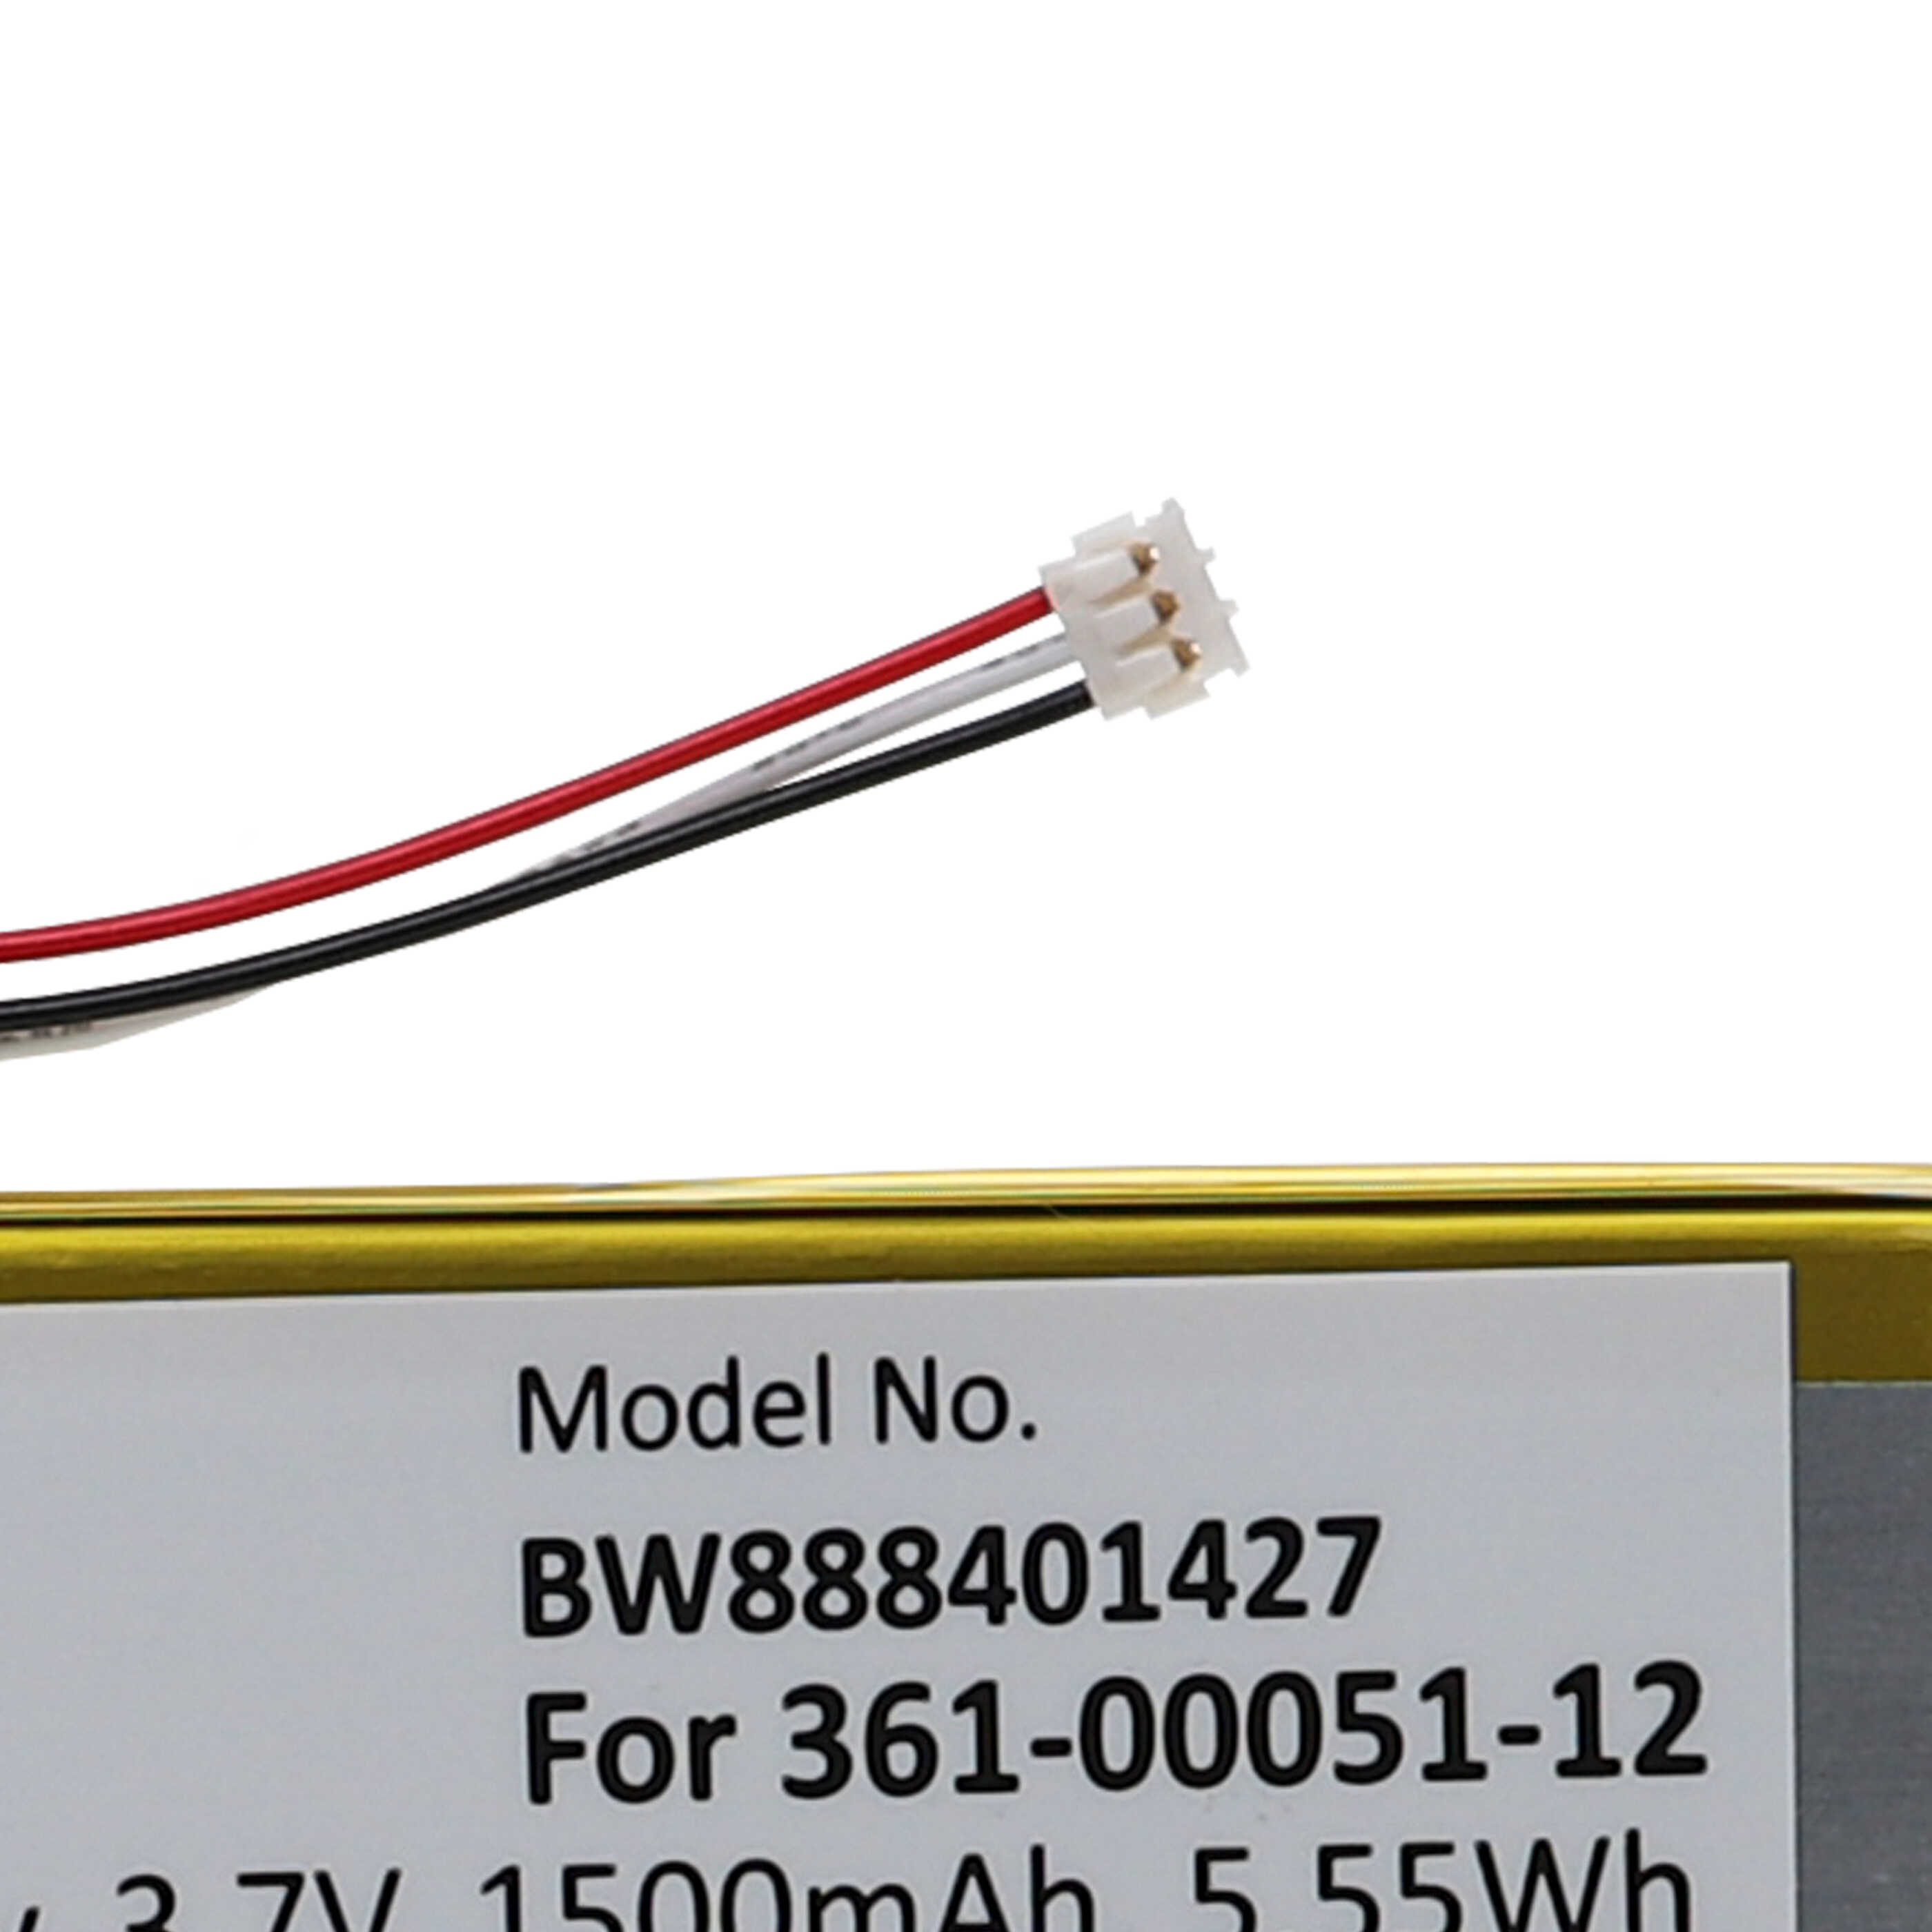 Batterie remplace Garmin 361-00051-02, 361-00051-12 pour navigation GPS - 1500mAh 3,7V Li-polymère